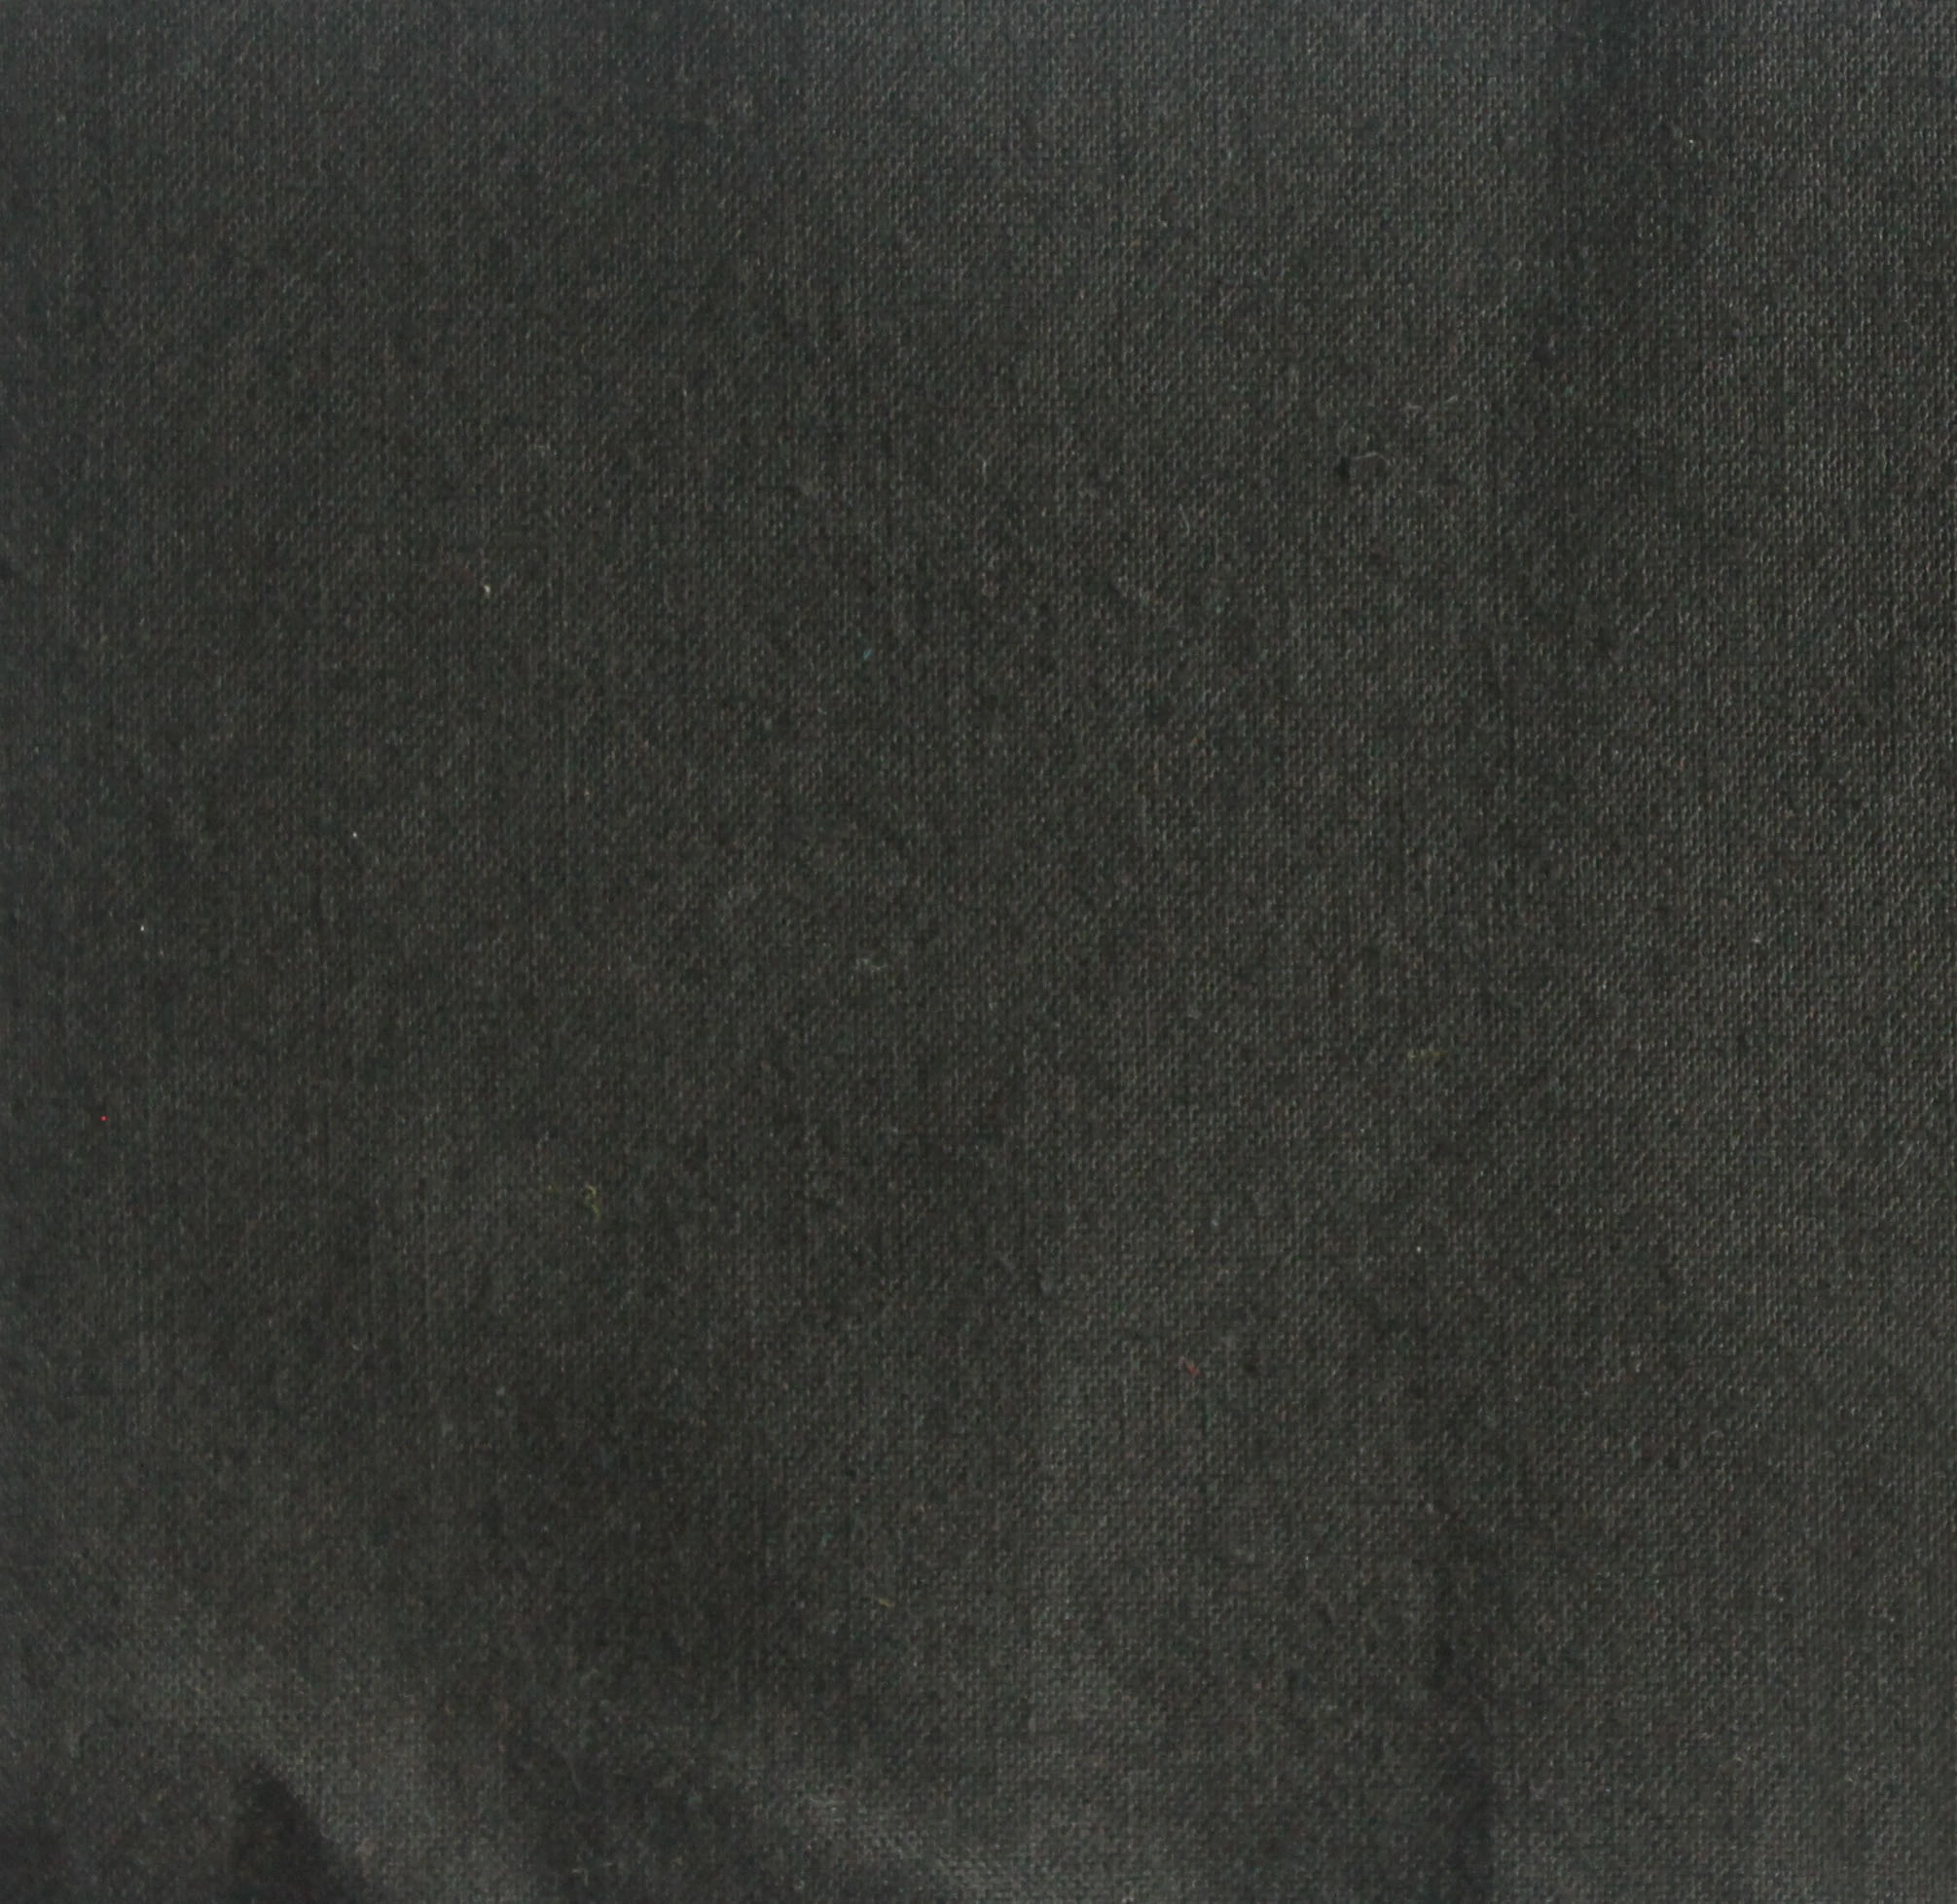 Disperse Black EX-SF ECO best black fabric dye aniline dye